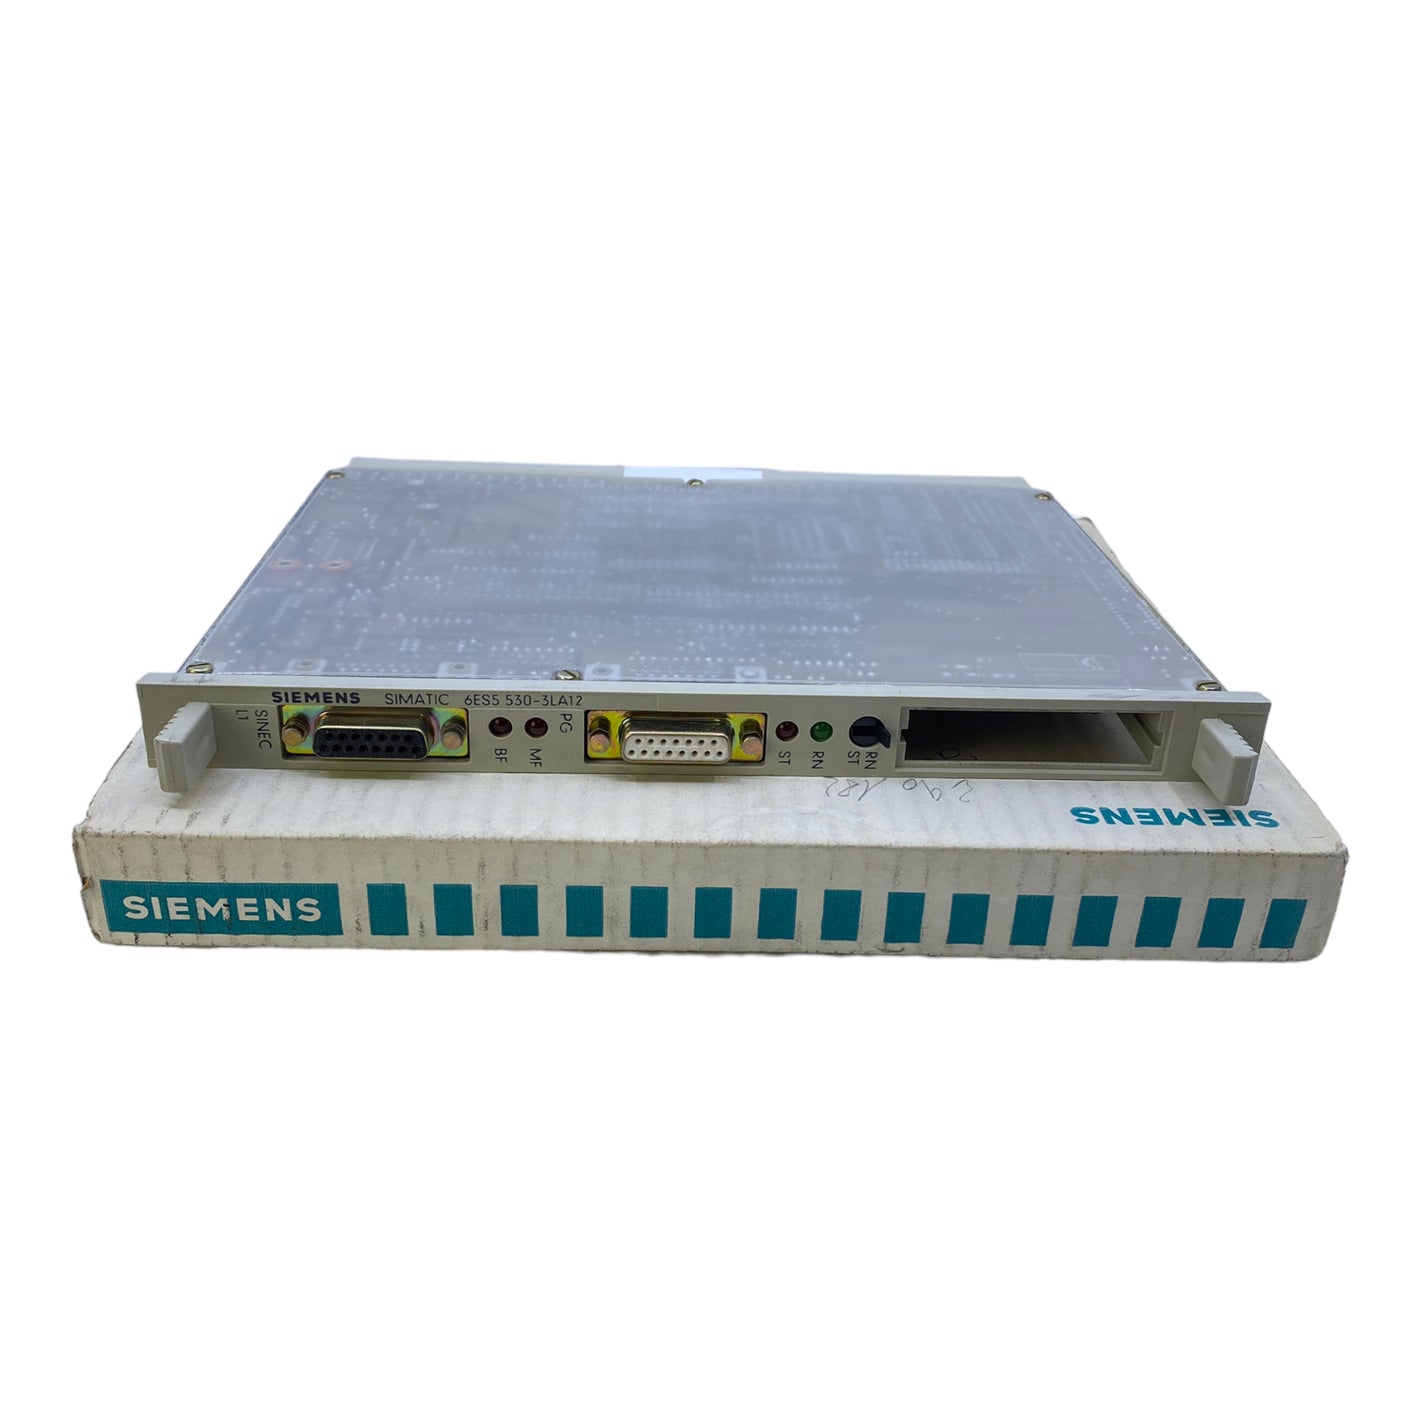 Siemens 6ES5530-3LA11 Kommunikationsprozessor Simatic S5